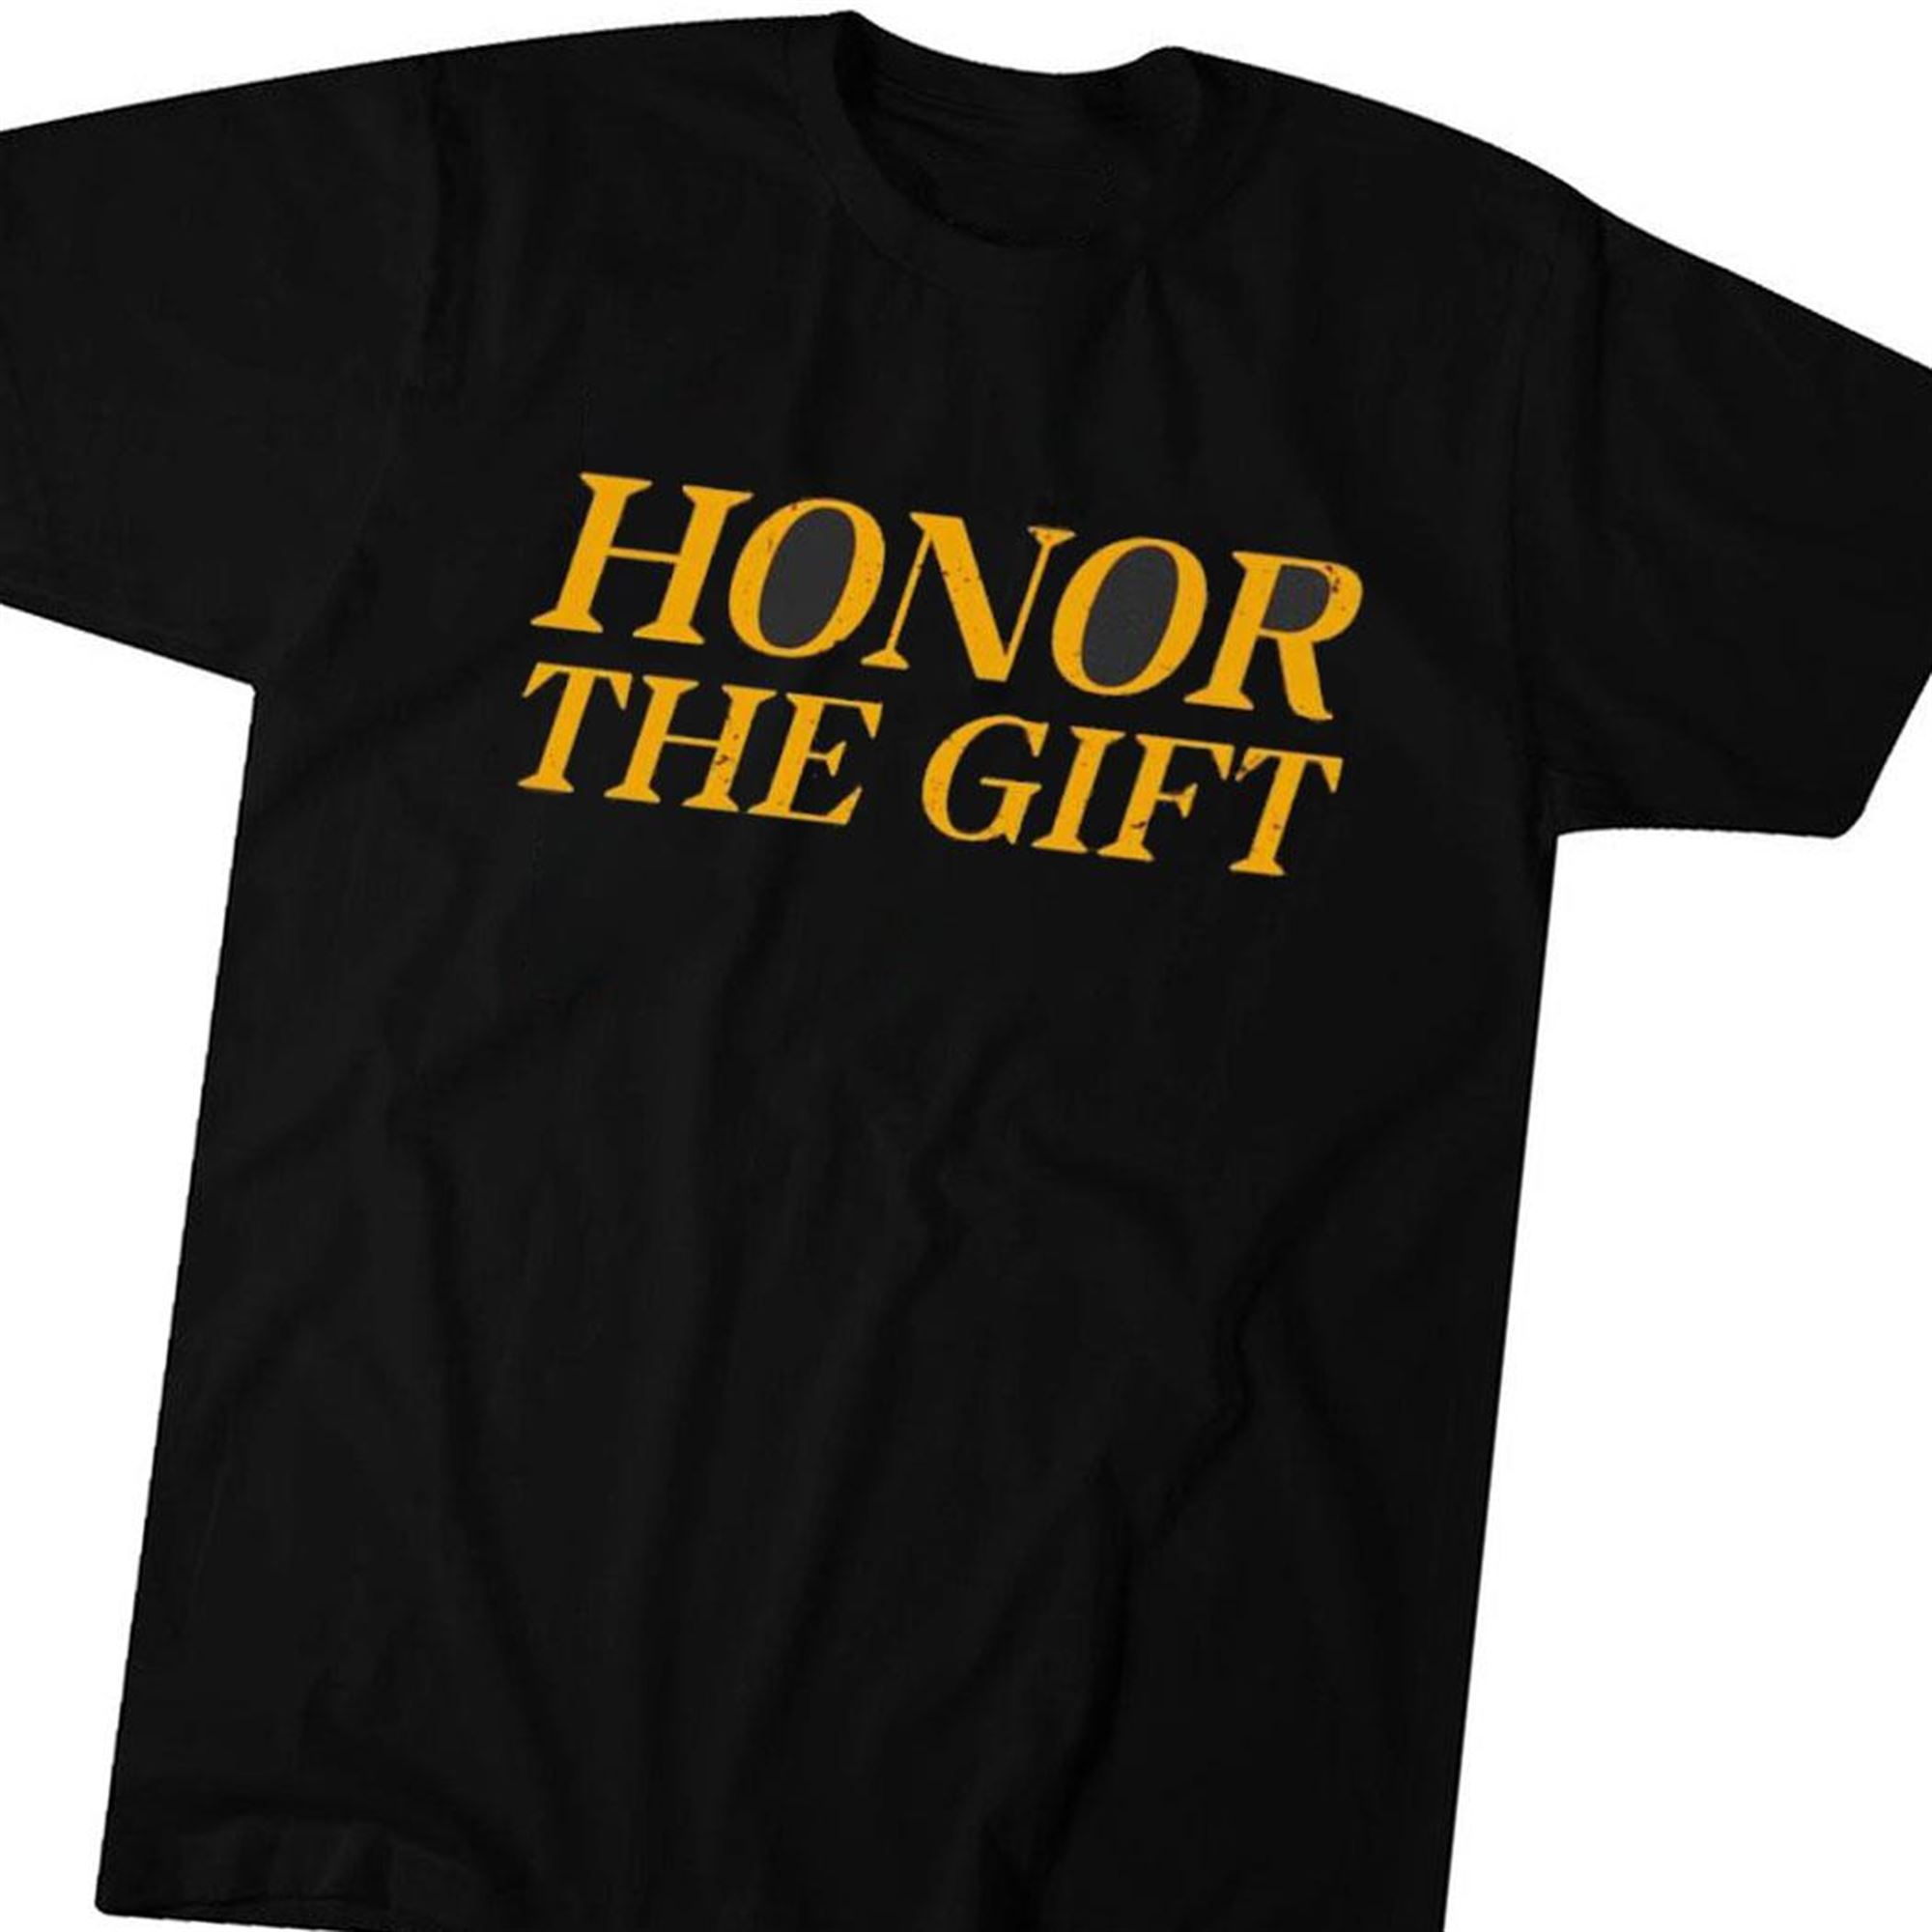 Kehlani Wearing Honor The Gift T-shirt